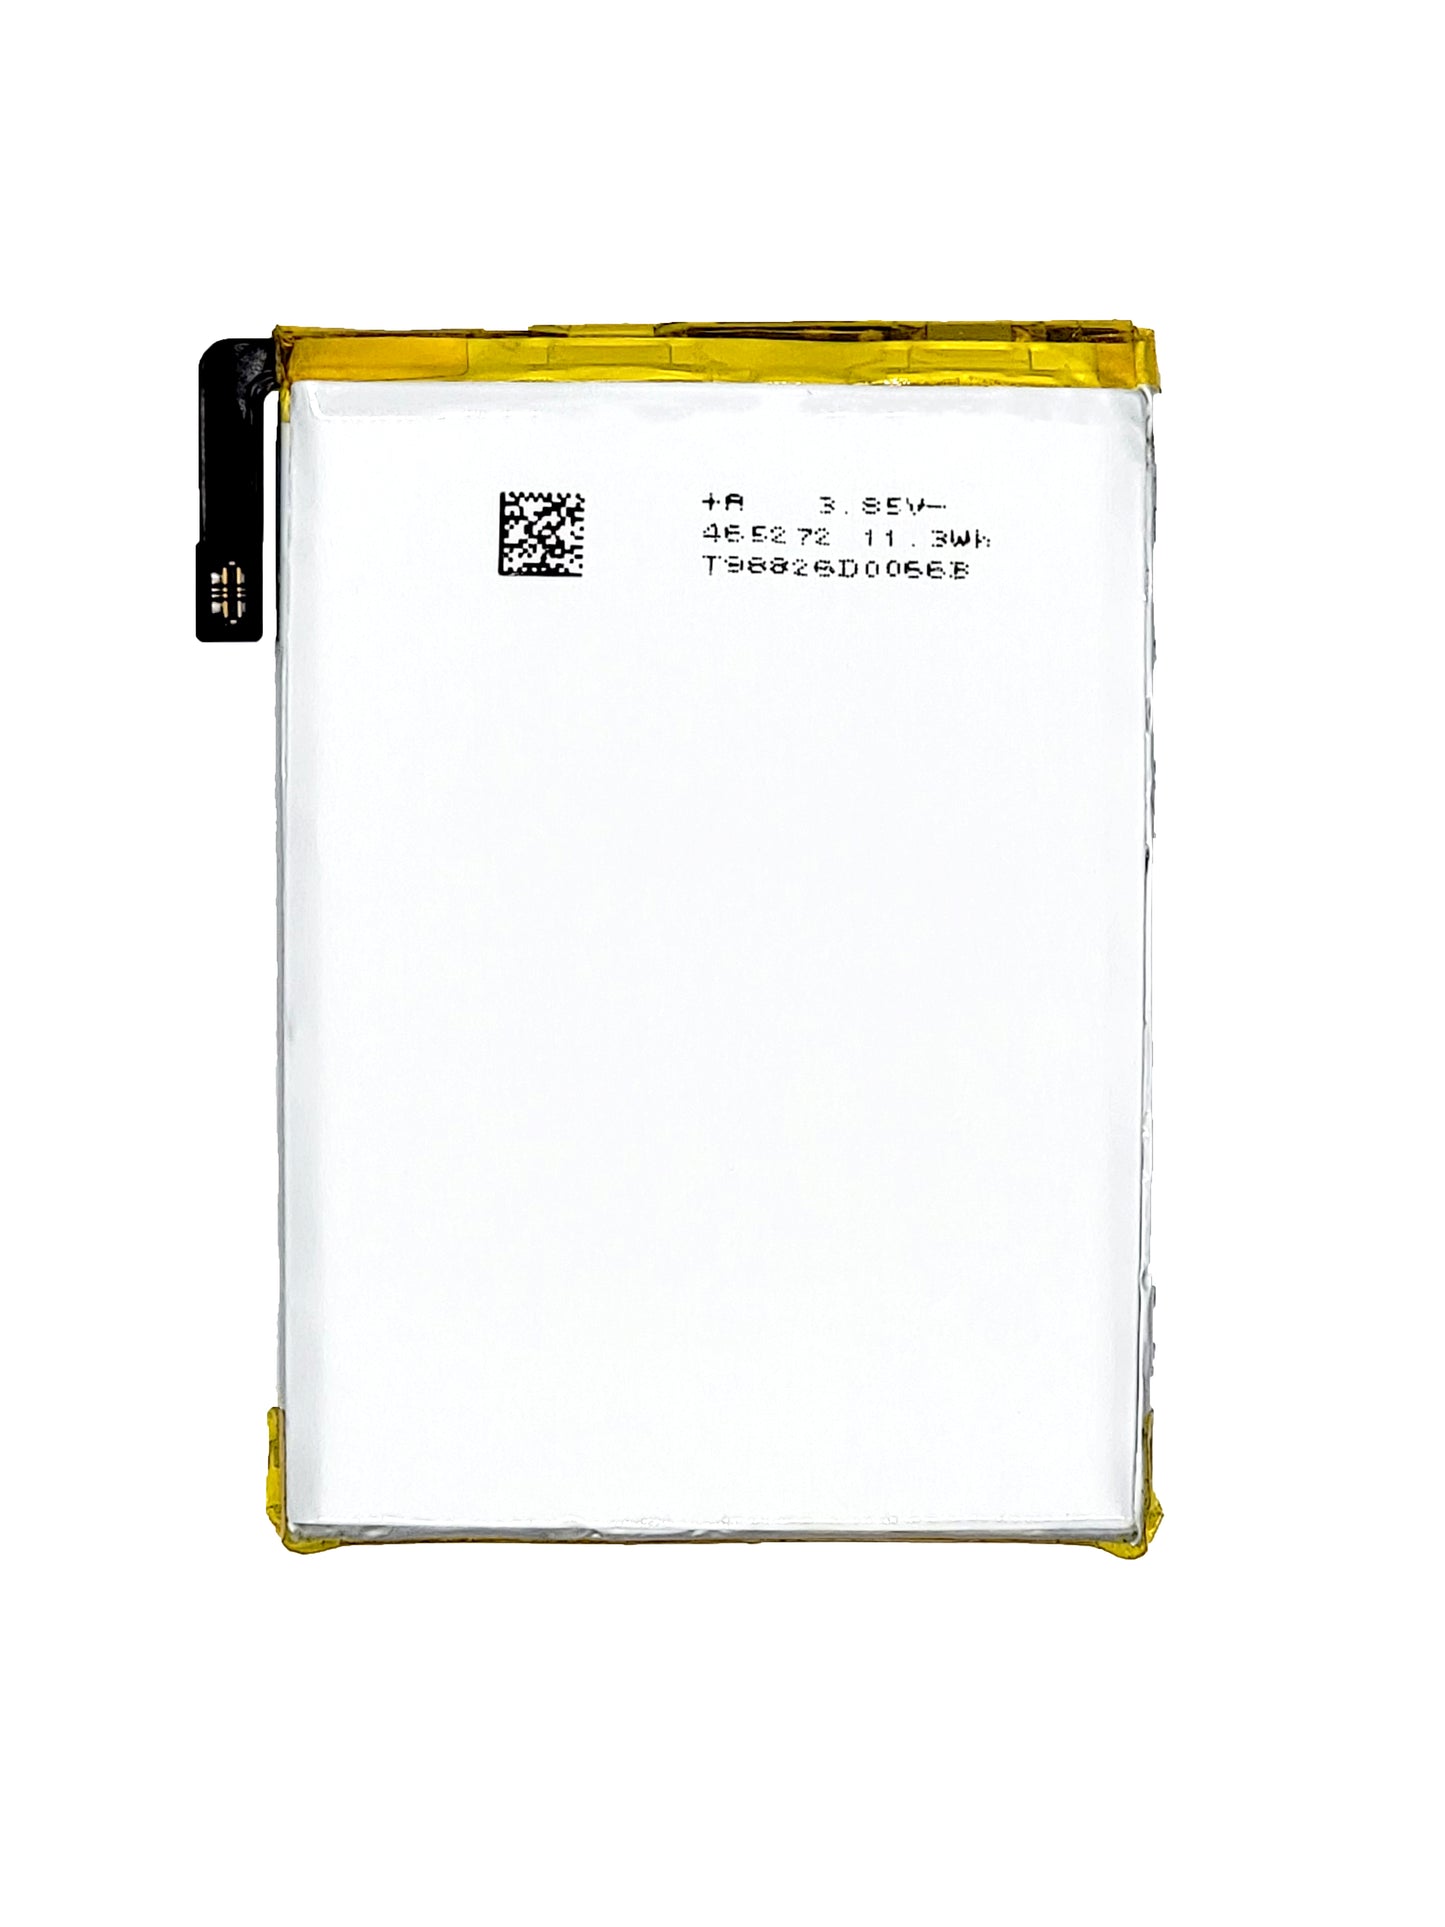 GOP Pixel 3 Battery (G013A-B) (Premium)